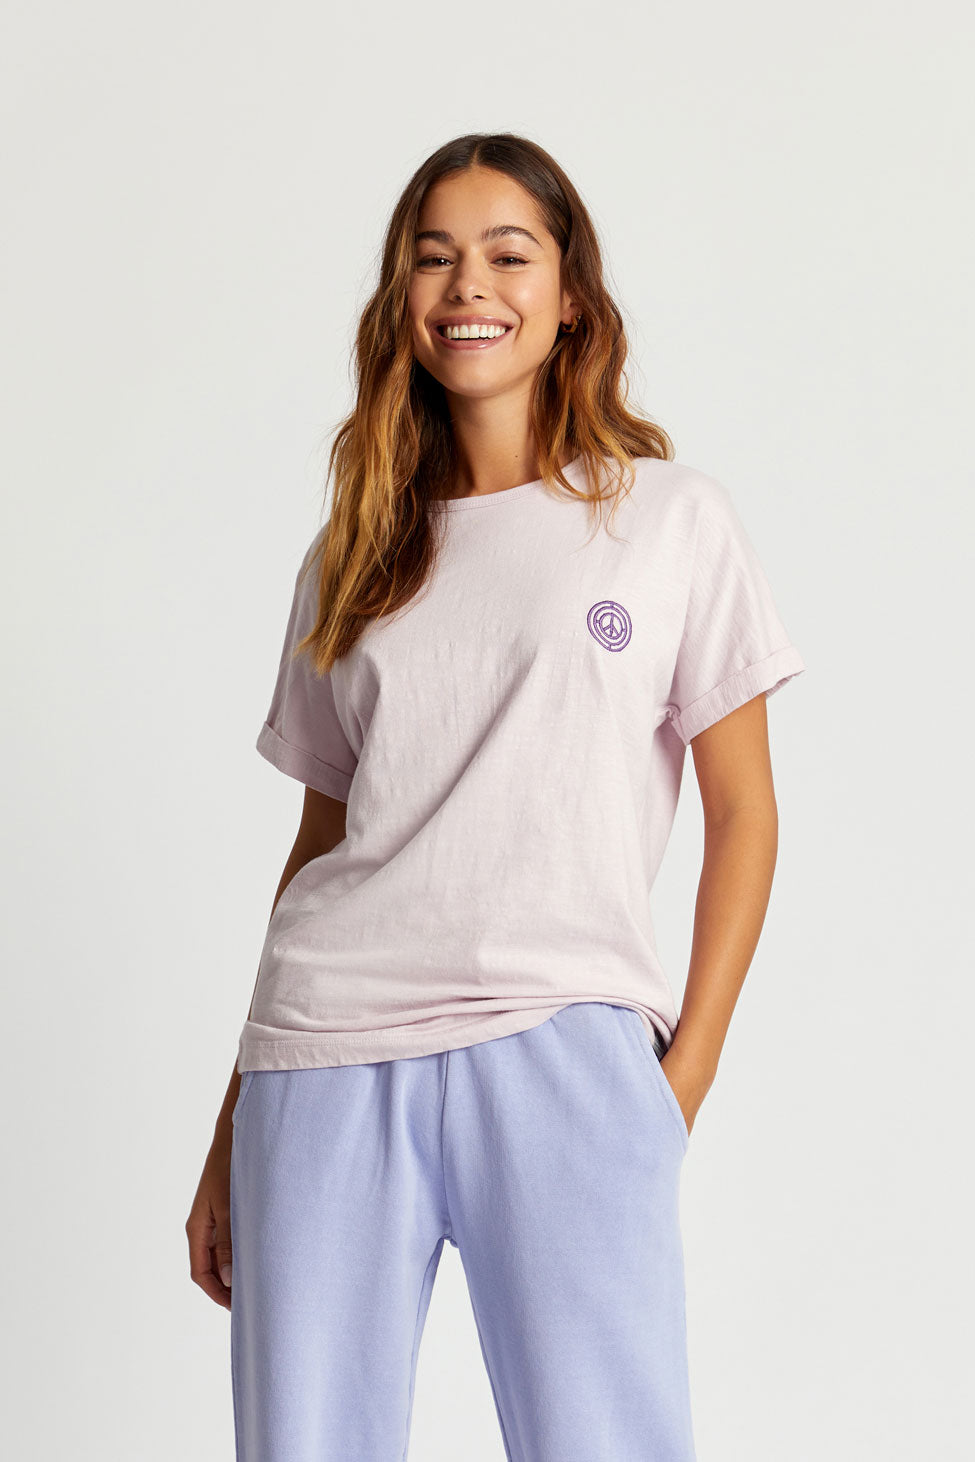 Purple T-shirt SUNRISE made of organic cotton from Komodo